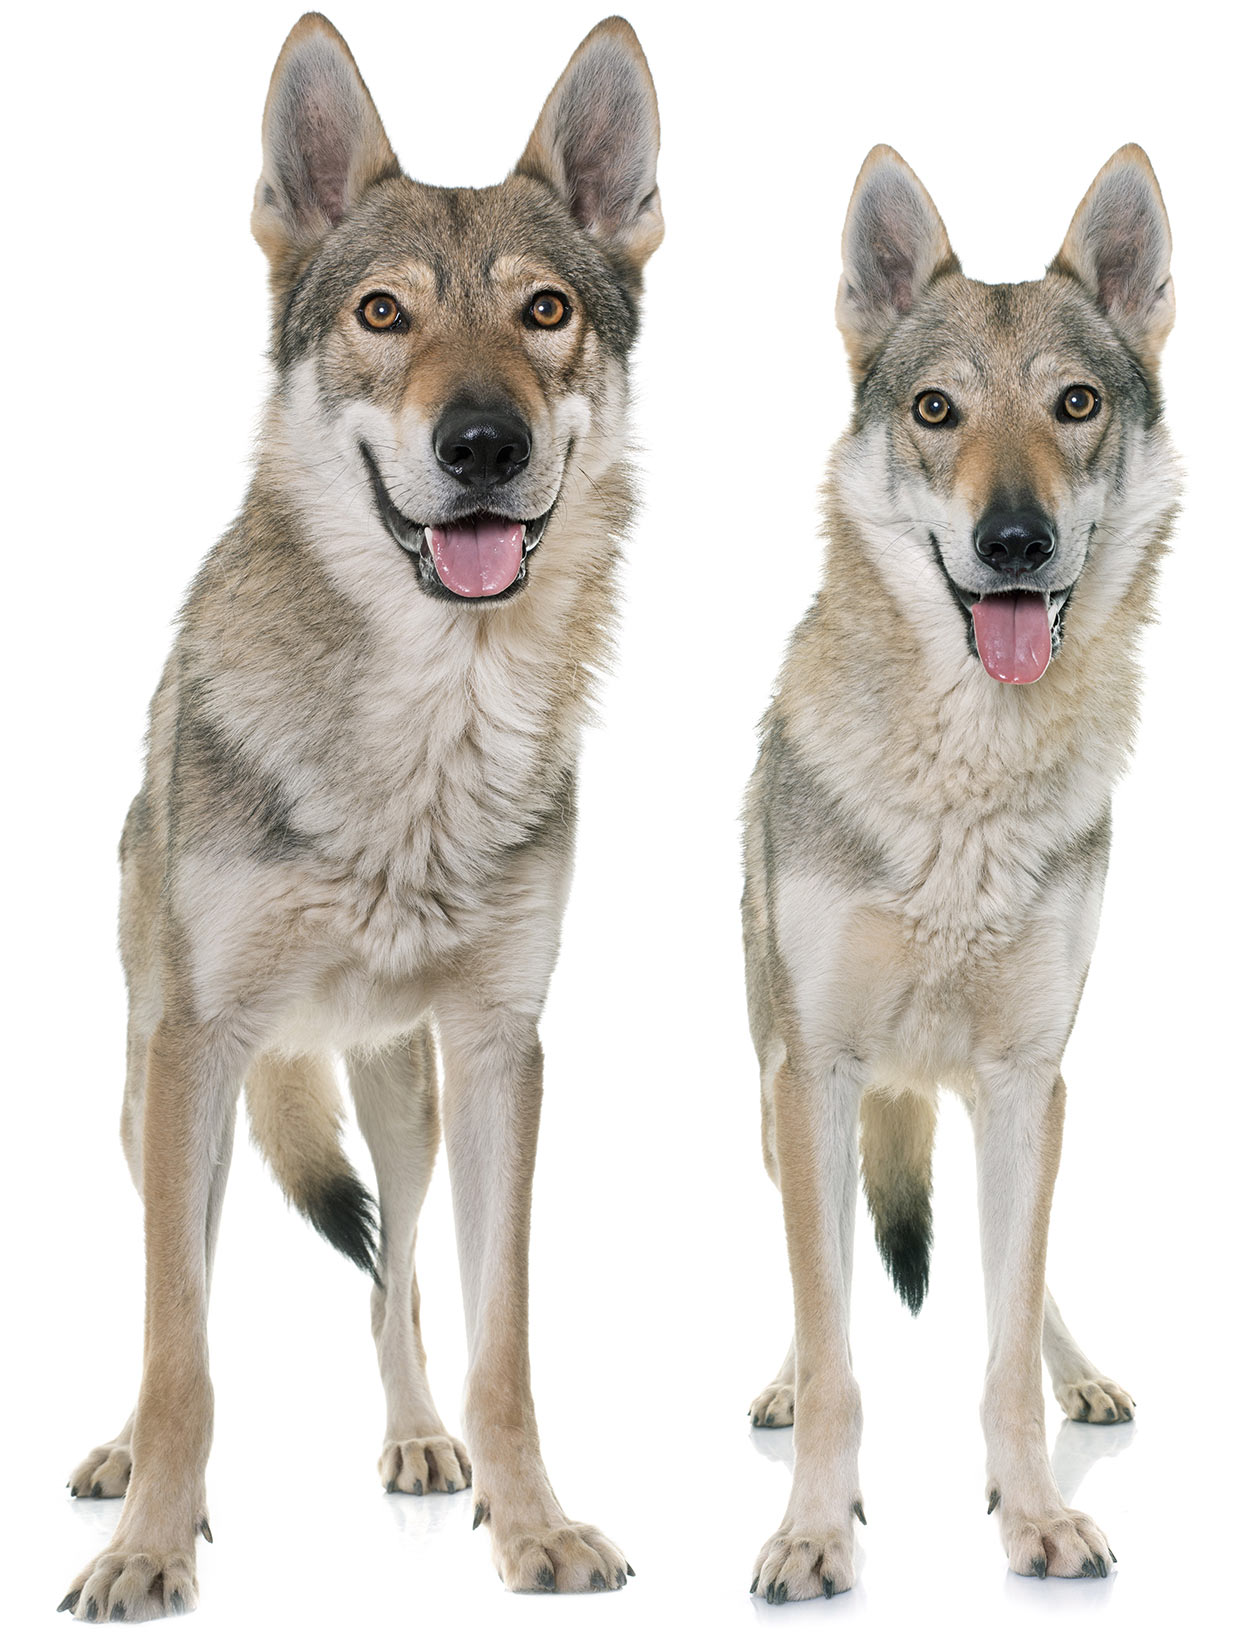 Czechoslovakian Wolfdog - The Happy Puppy Site